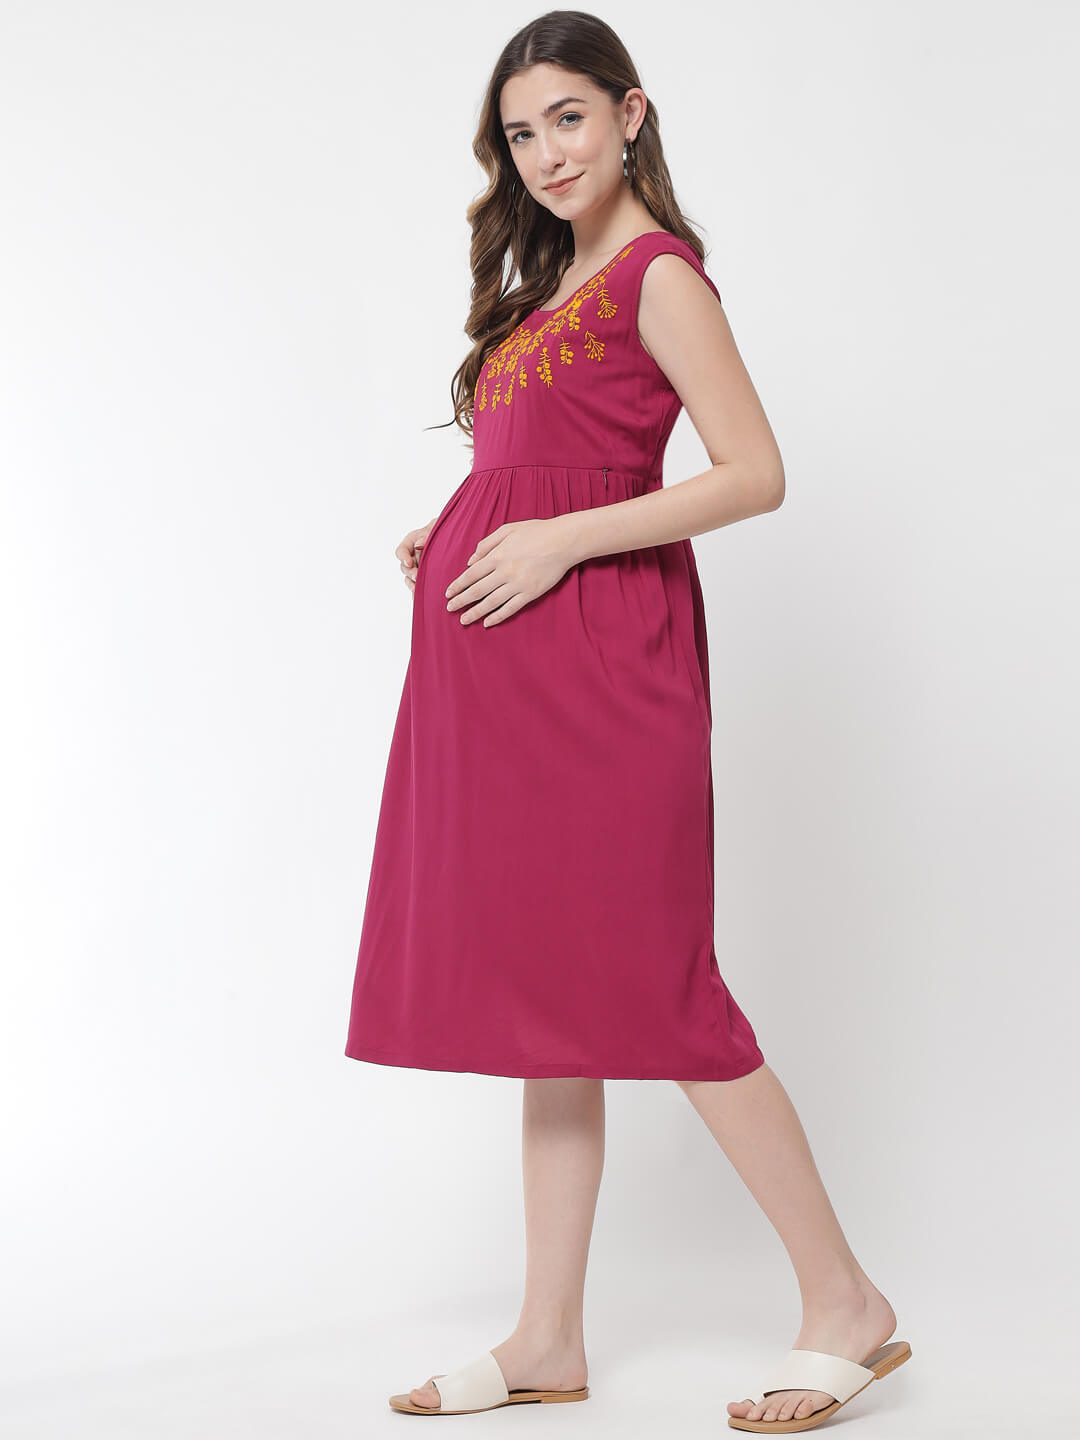 Women Maternity Dress With Nursing Access